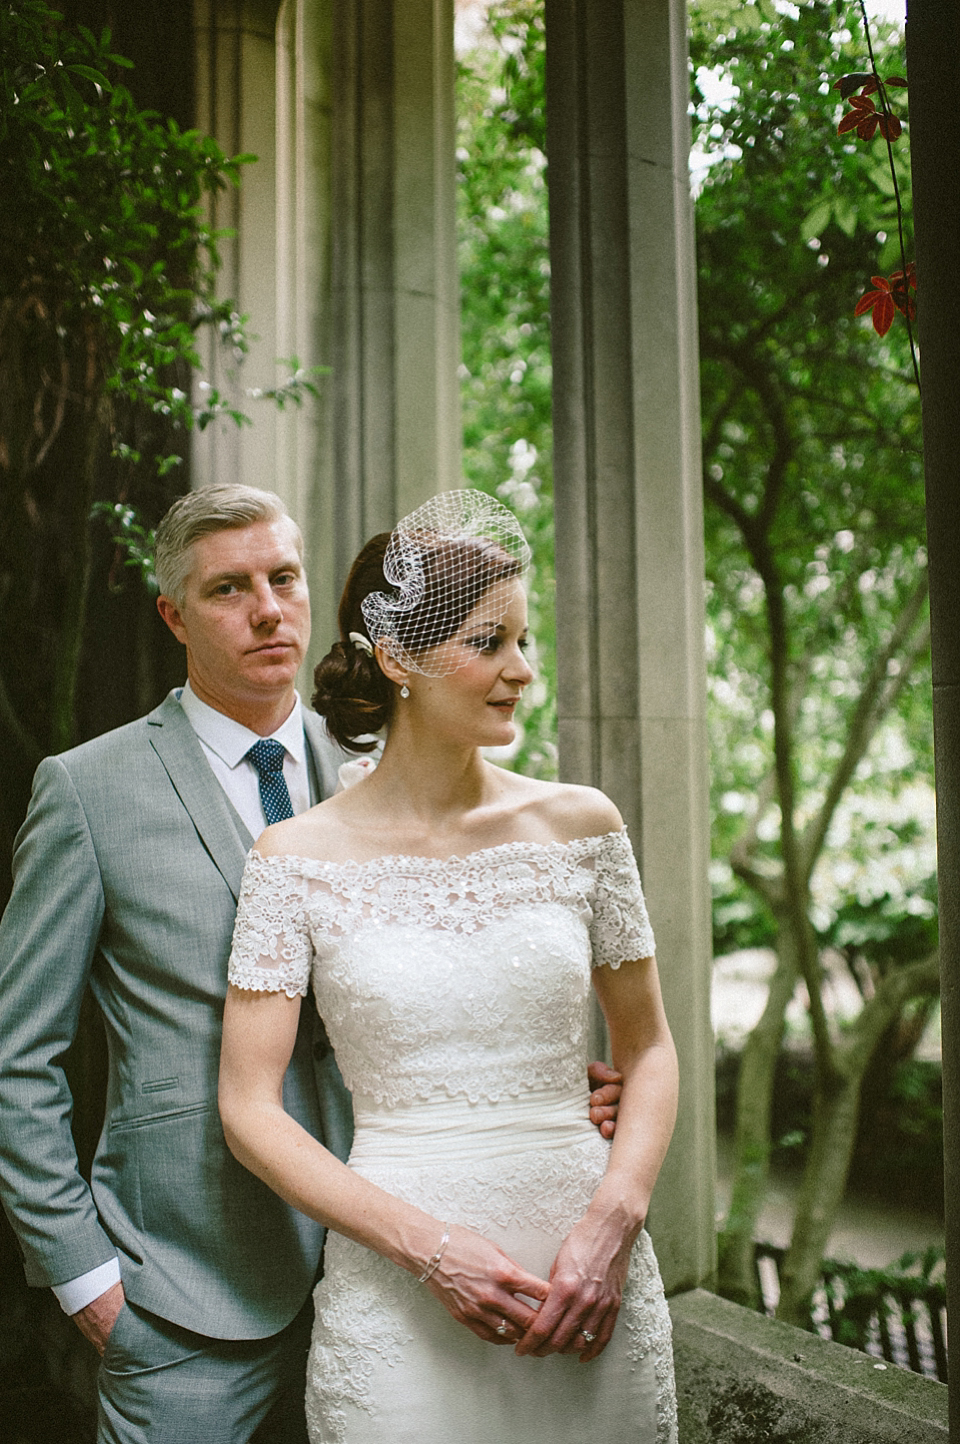 pronovias wedding dress, london wedding, birdcage veil